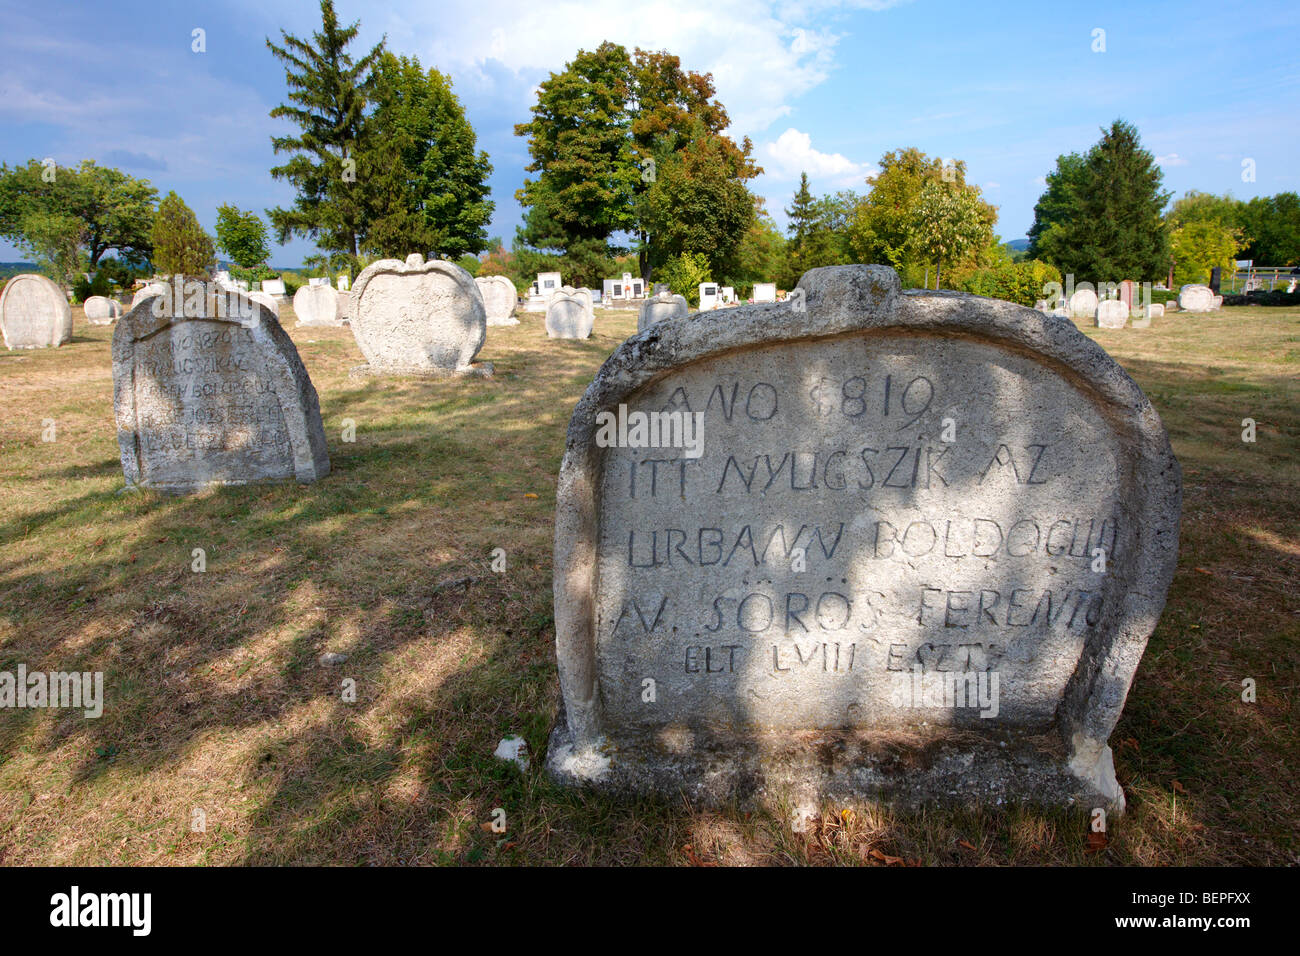 Early 19th century grave stone of the Balatonudvari cemetery - Balaton Hungary Stock Photo